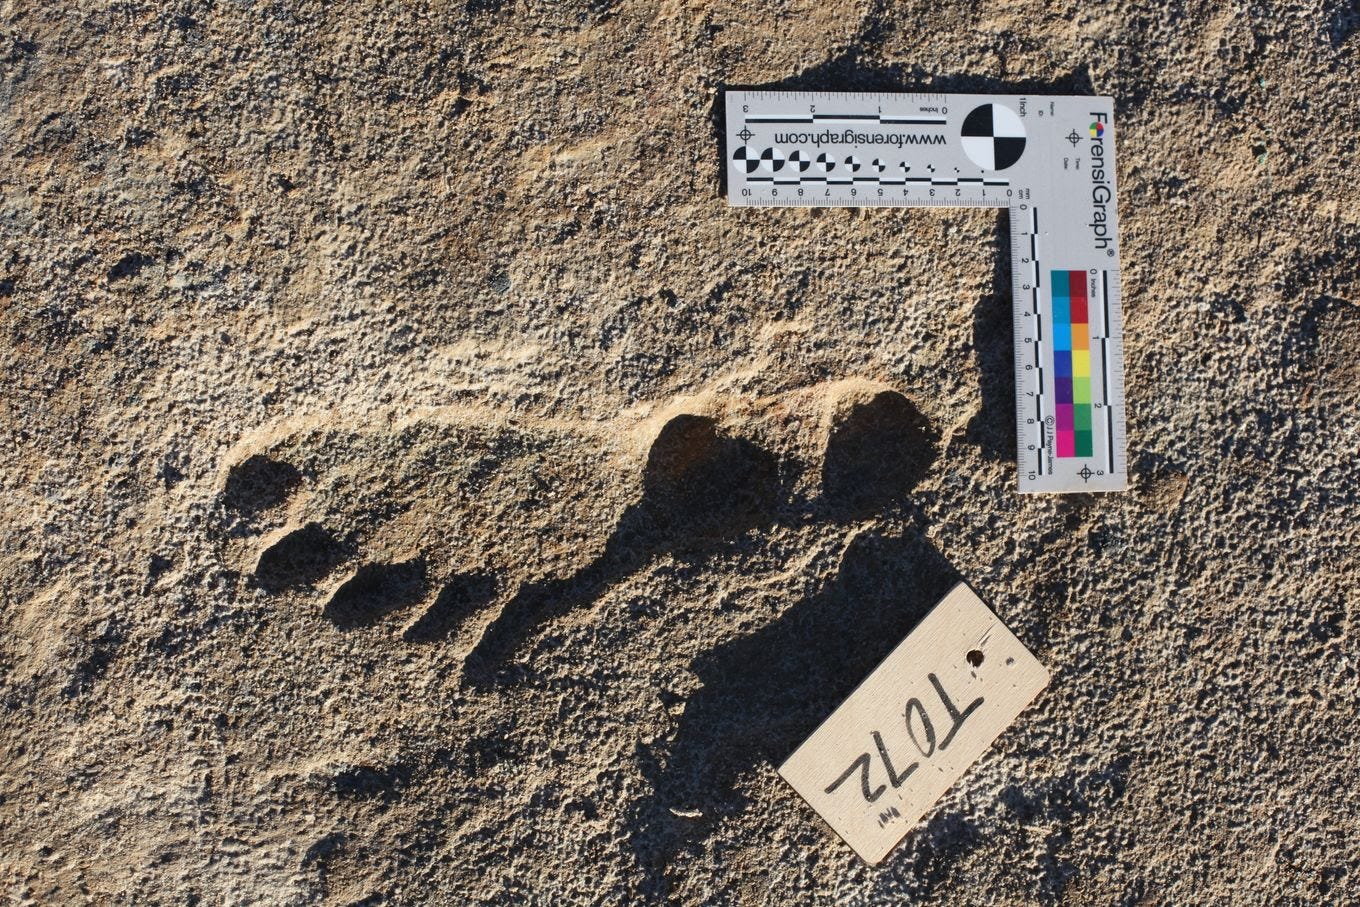 A human footprint found at White Sands National Park. (National Park Service)